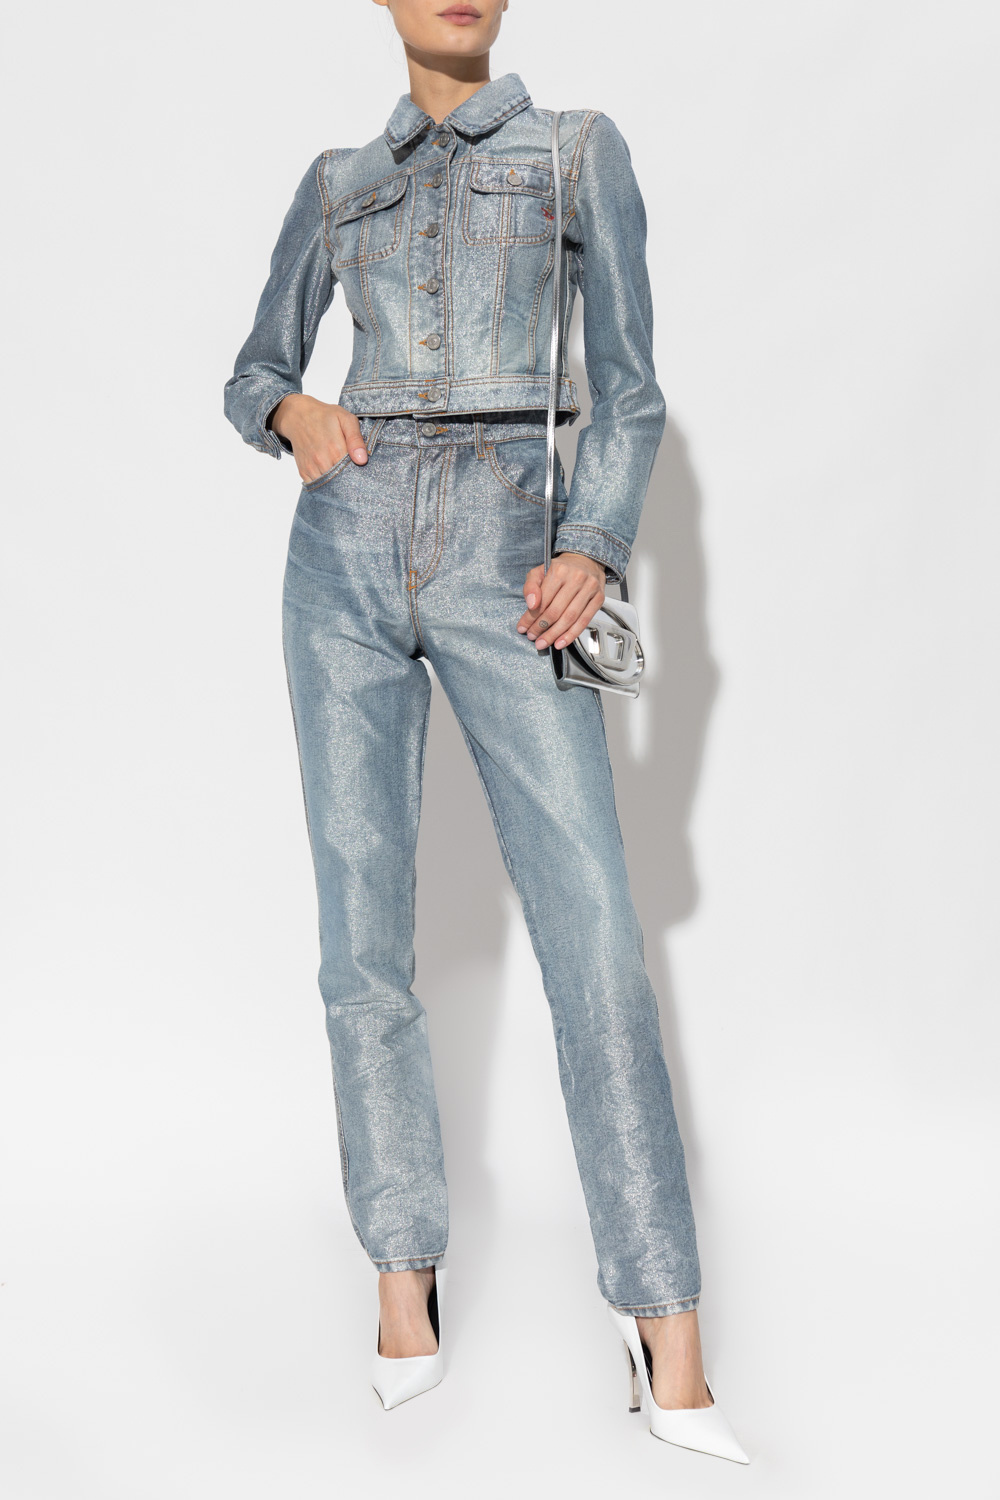 IetpShops | Women\'s Clothing | nik jeans \'1994 shorts epic dri | fast L.32\' fit Diesel